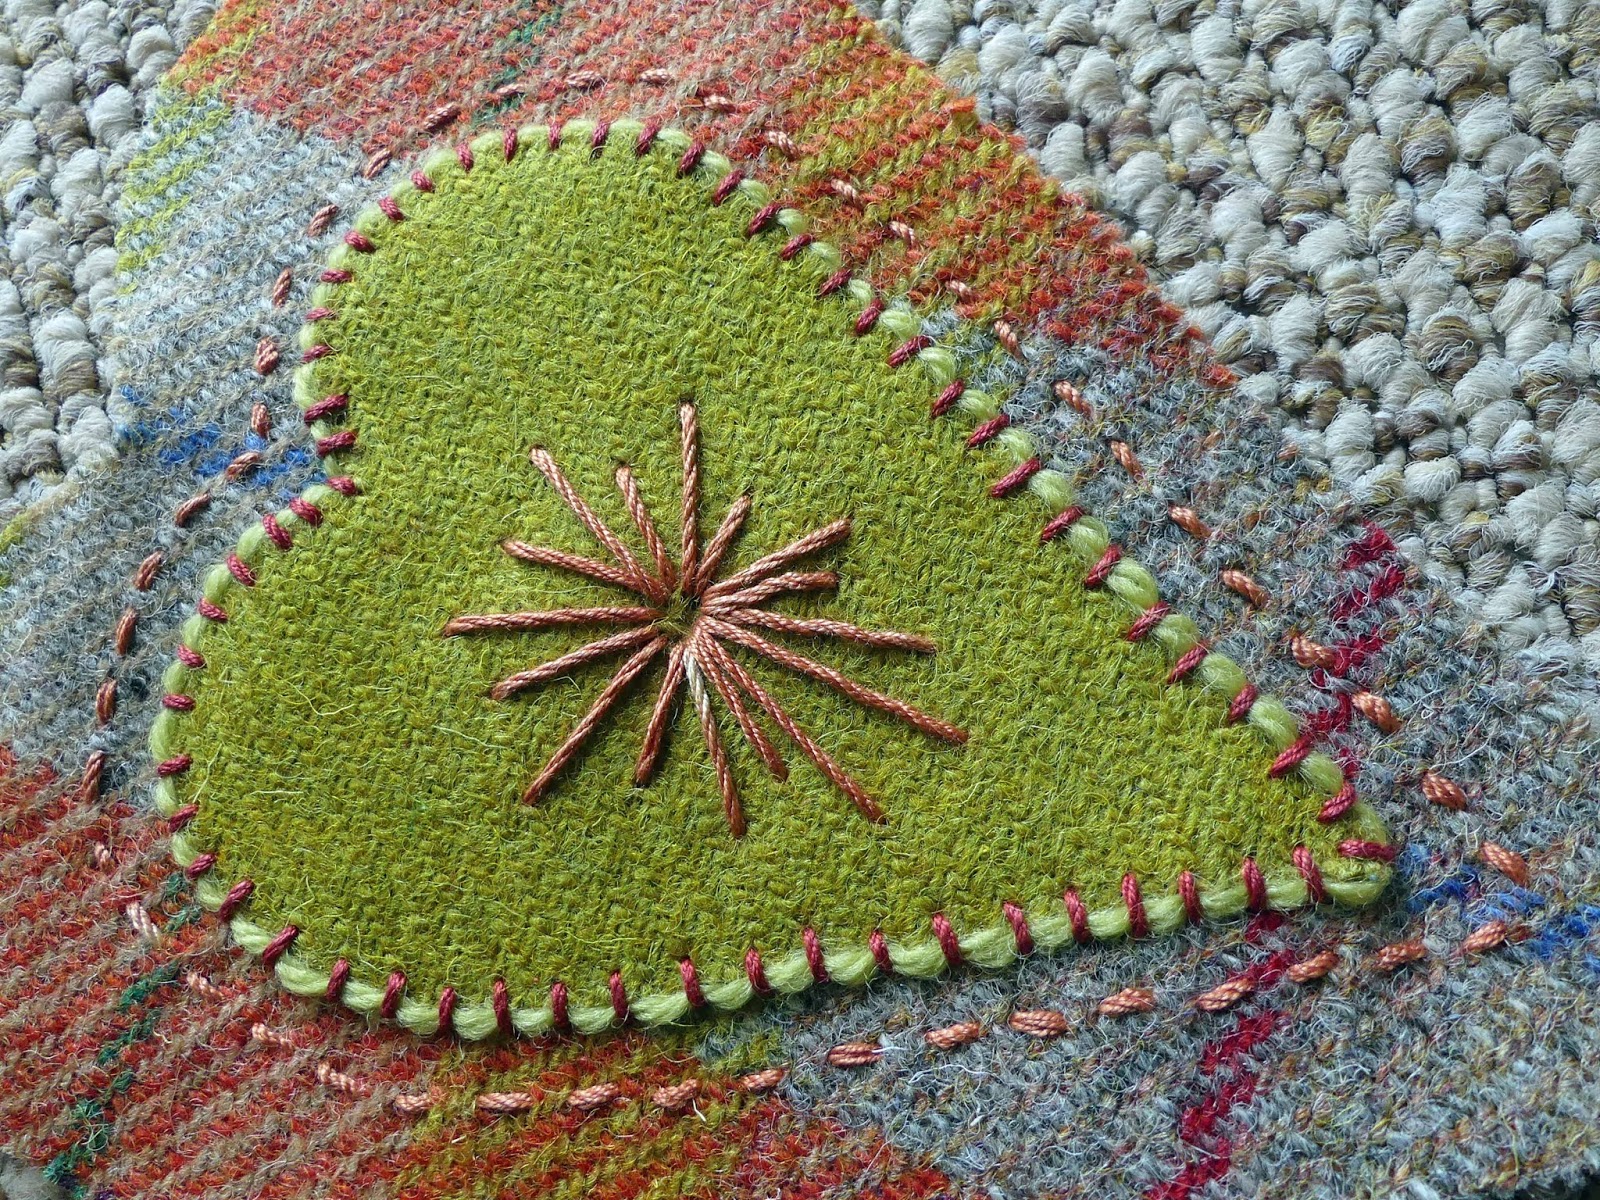 Somerset Stitch: Basic Hand Embroidery Stitches